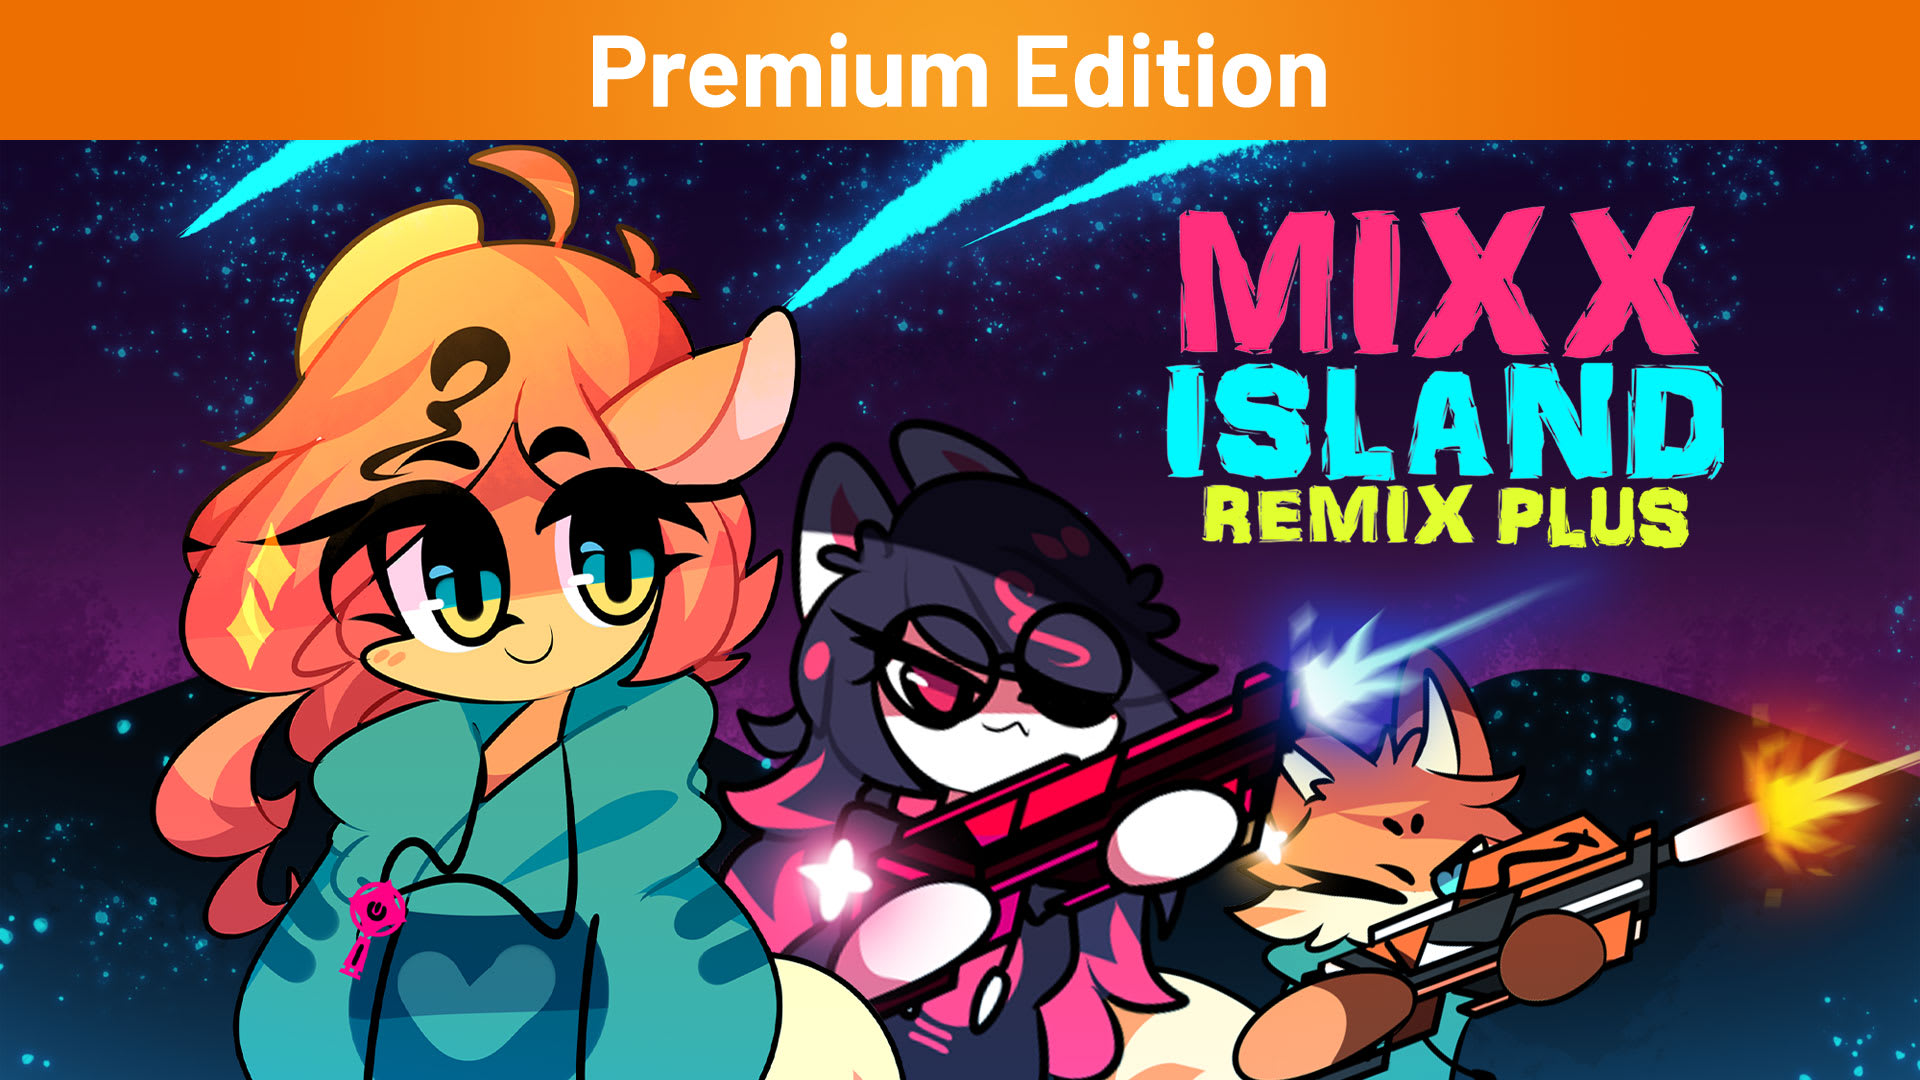 Mixx Island: Remix Plus Premium Edition